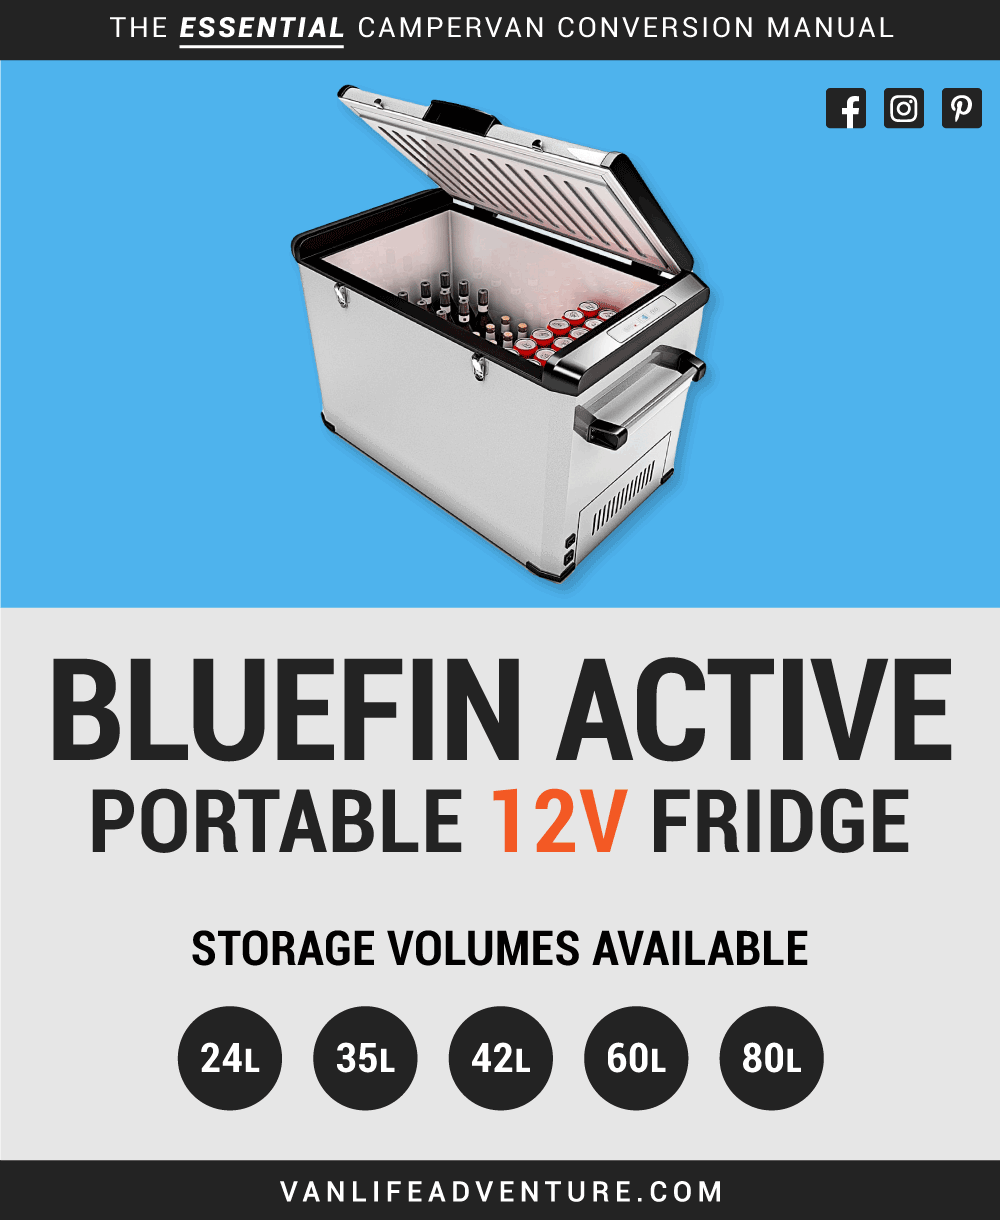 Bluefin Active 12v Portable Campervan Fridge Refrigerator RV Motorhome